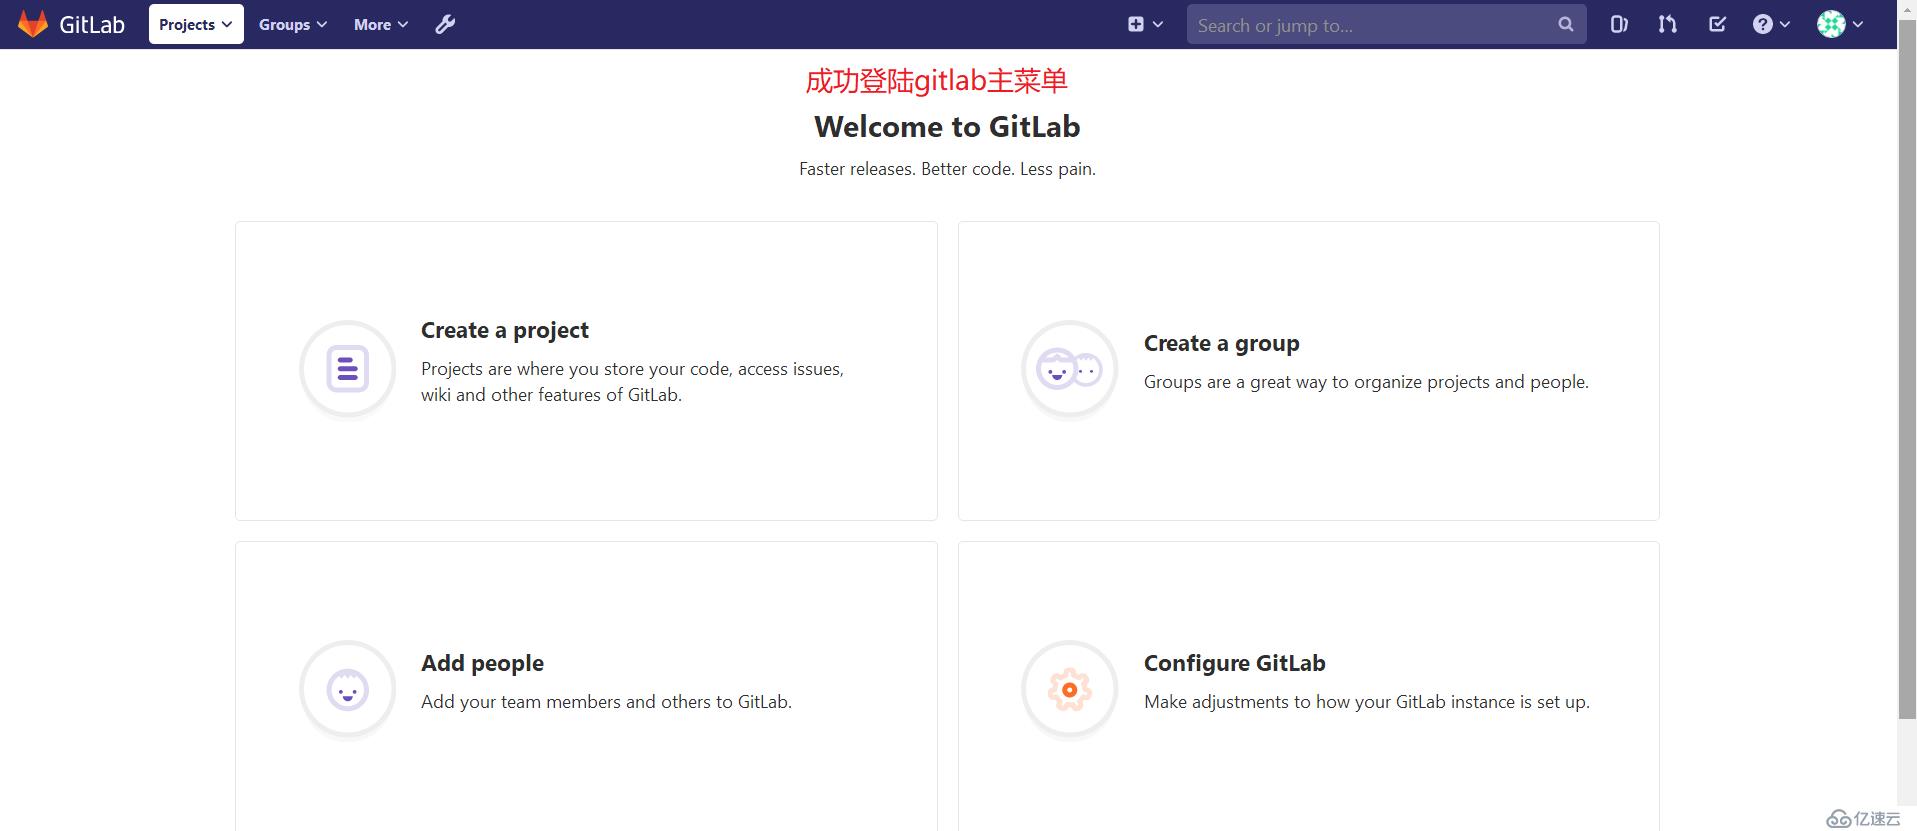 CentOS系统安装配置Gitlab步骤